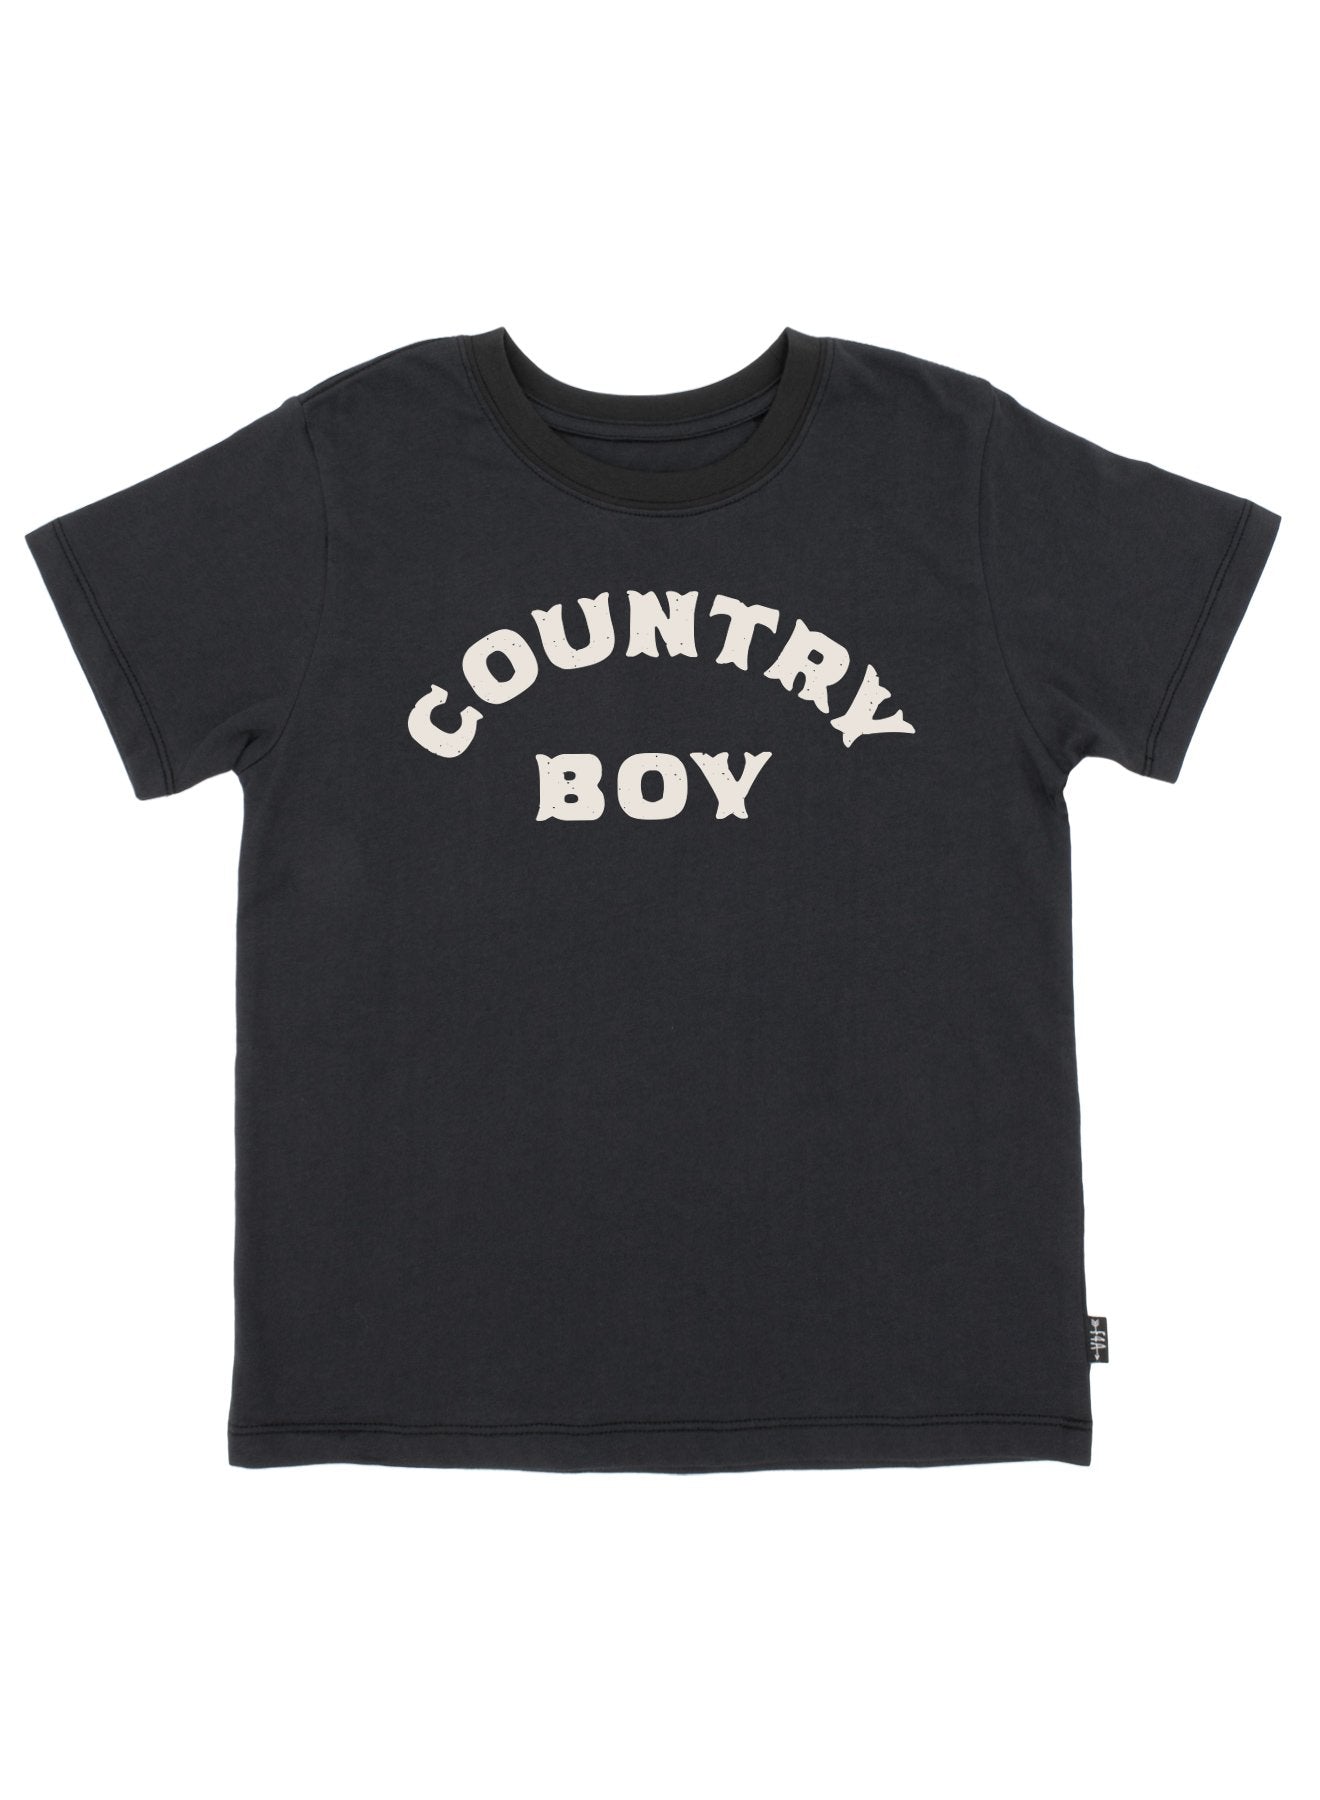 Country Boy Vintage Tee  - Doodlebug's Children's Boutique